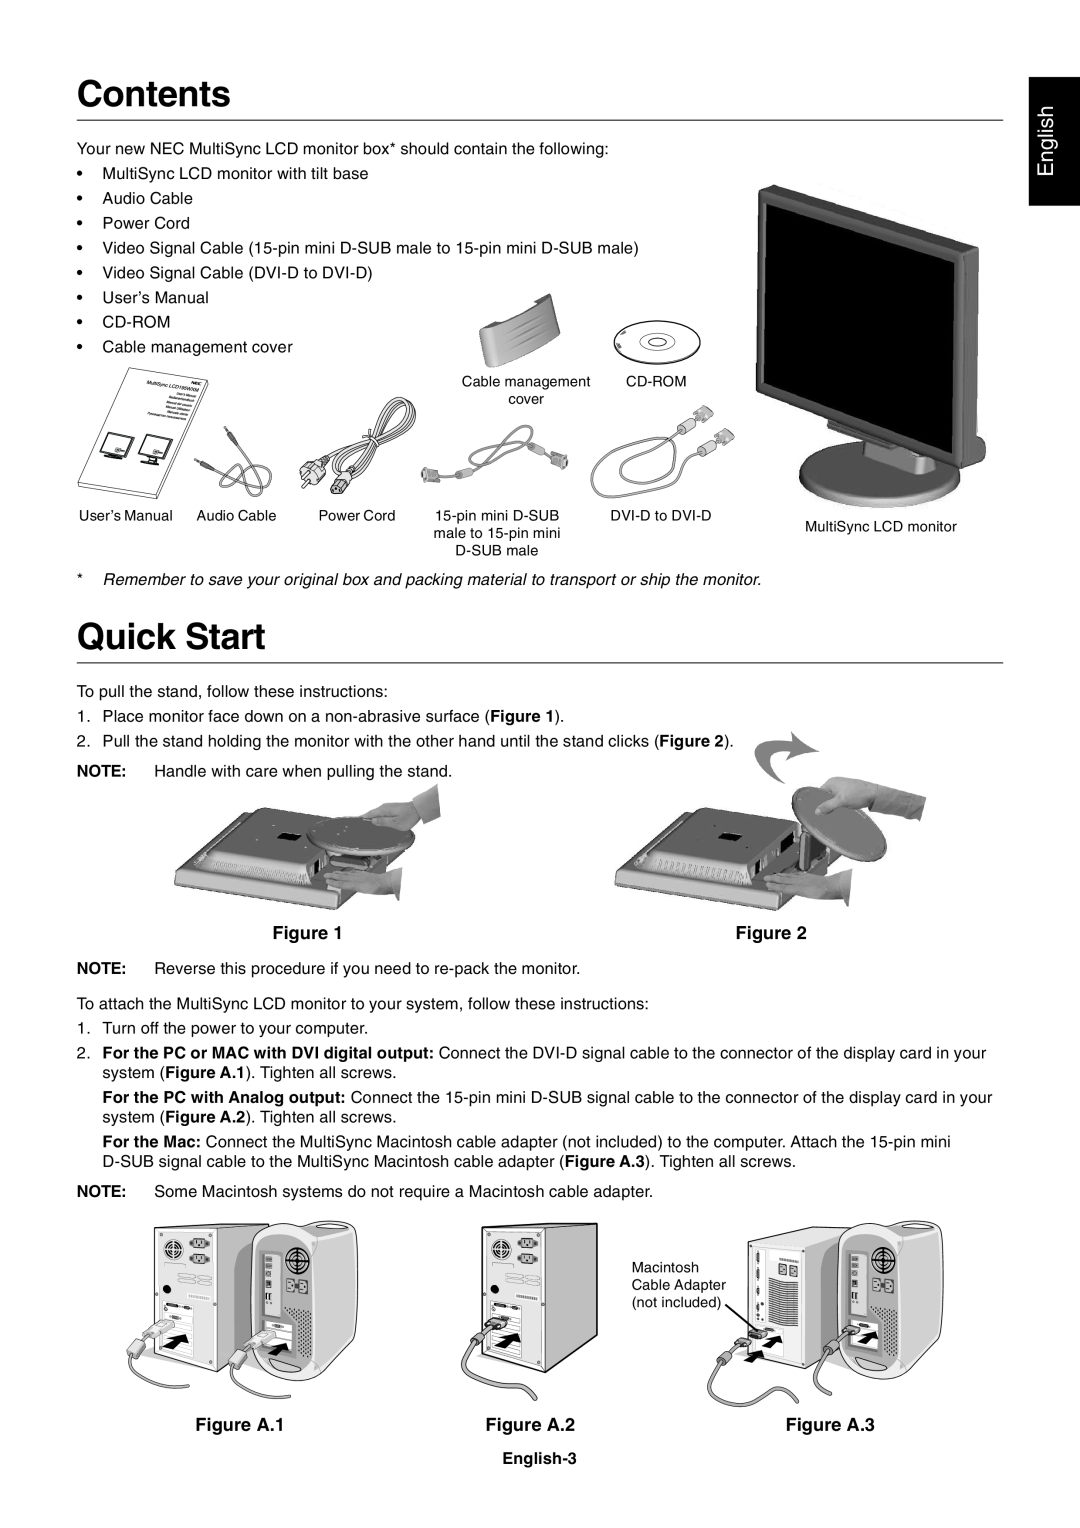 NEC LCD1970NX user manual Contents, Quick Start, English, Figure A.1, Figure A.2, Figure A.3 